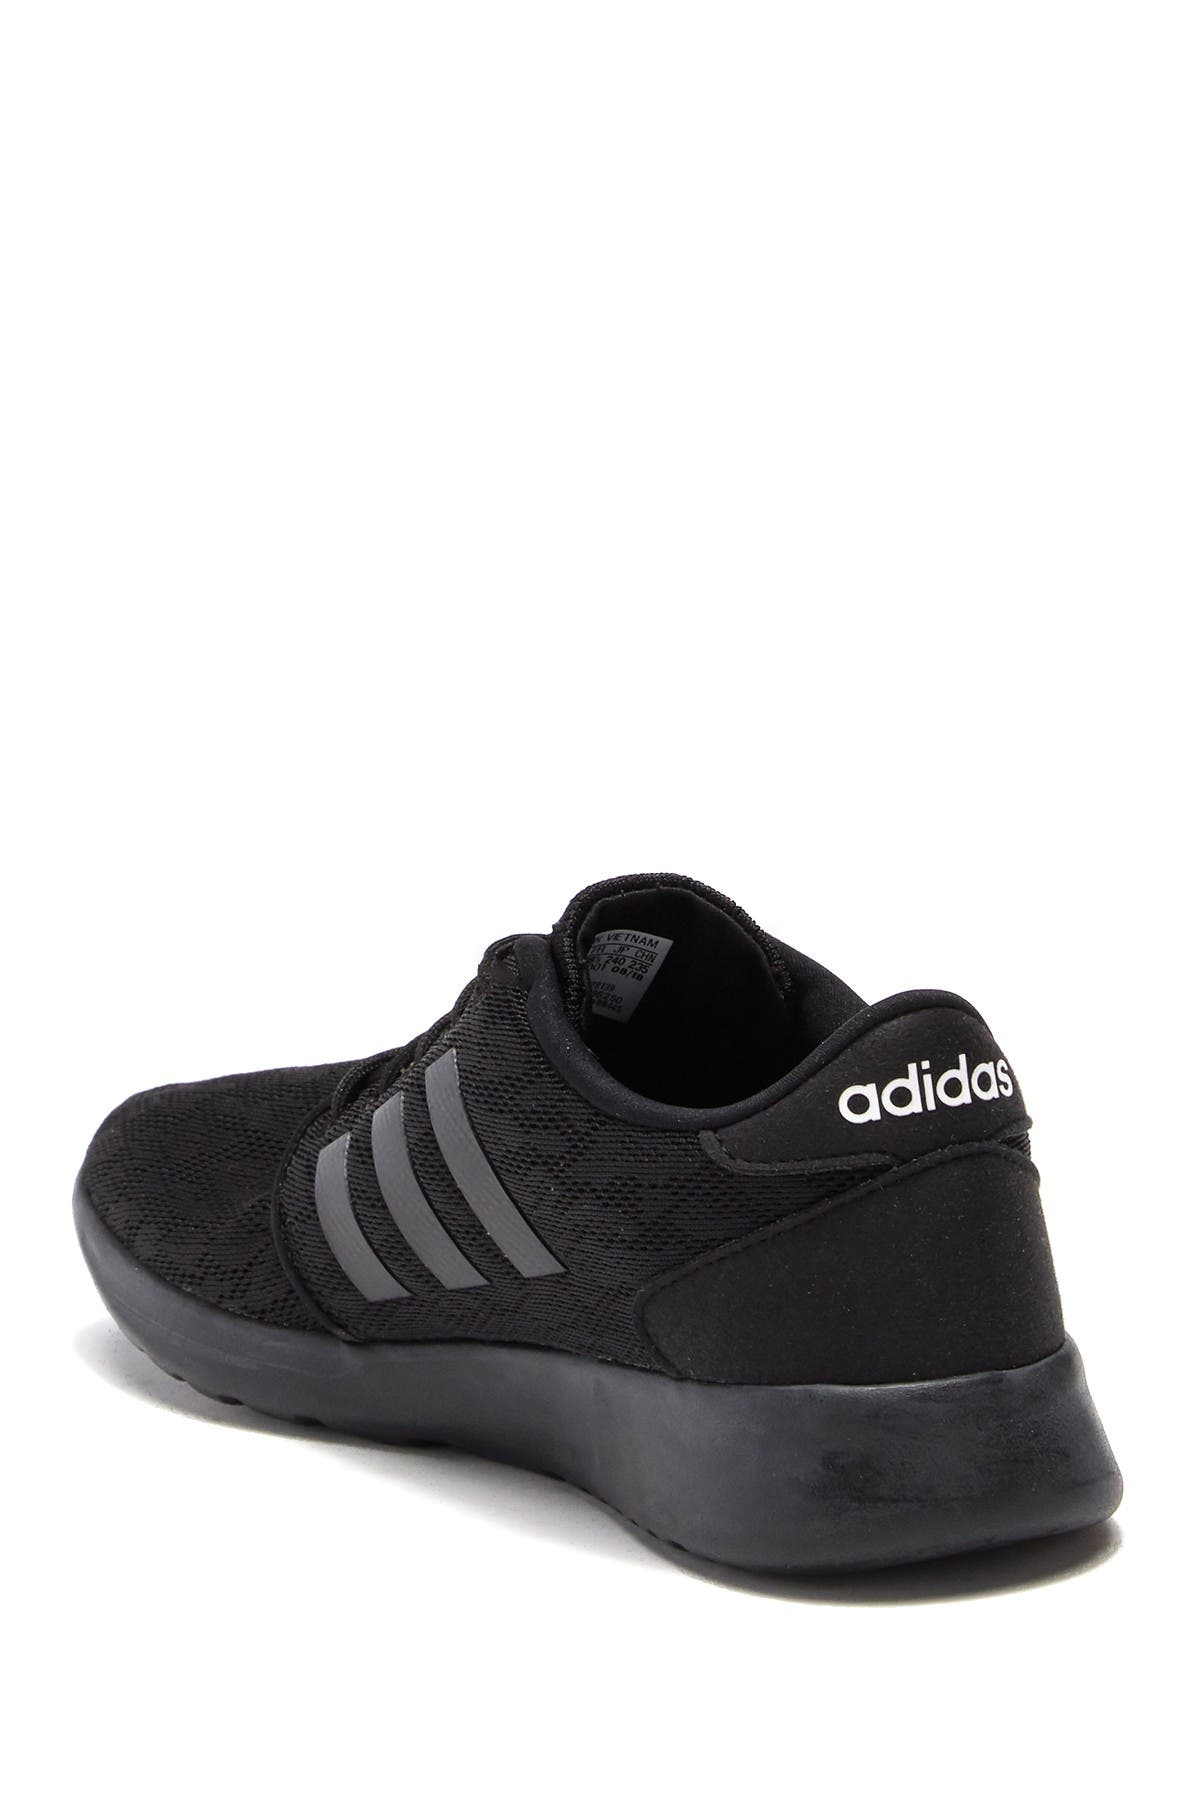 adidas | Cloudfoam QT Racer Sneaker 